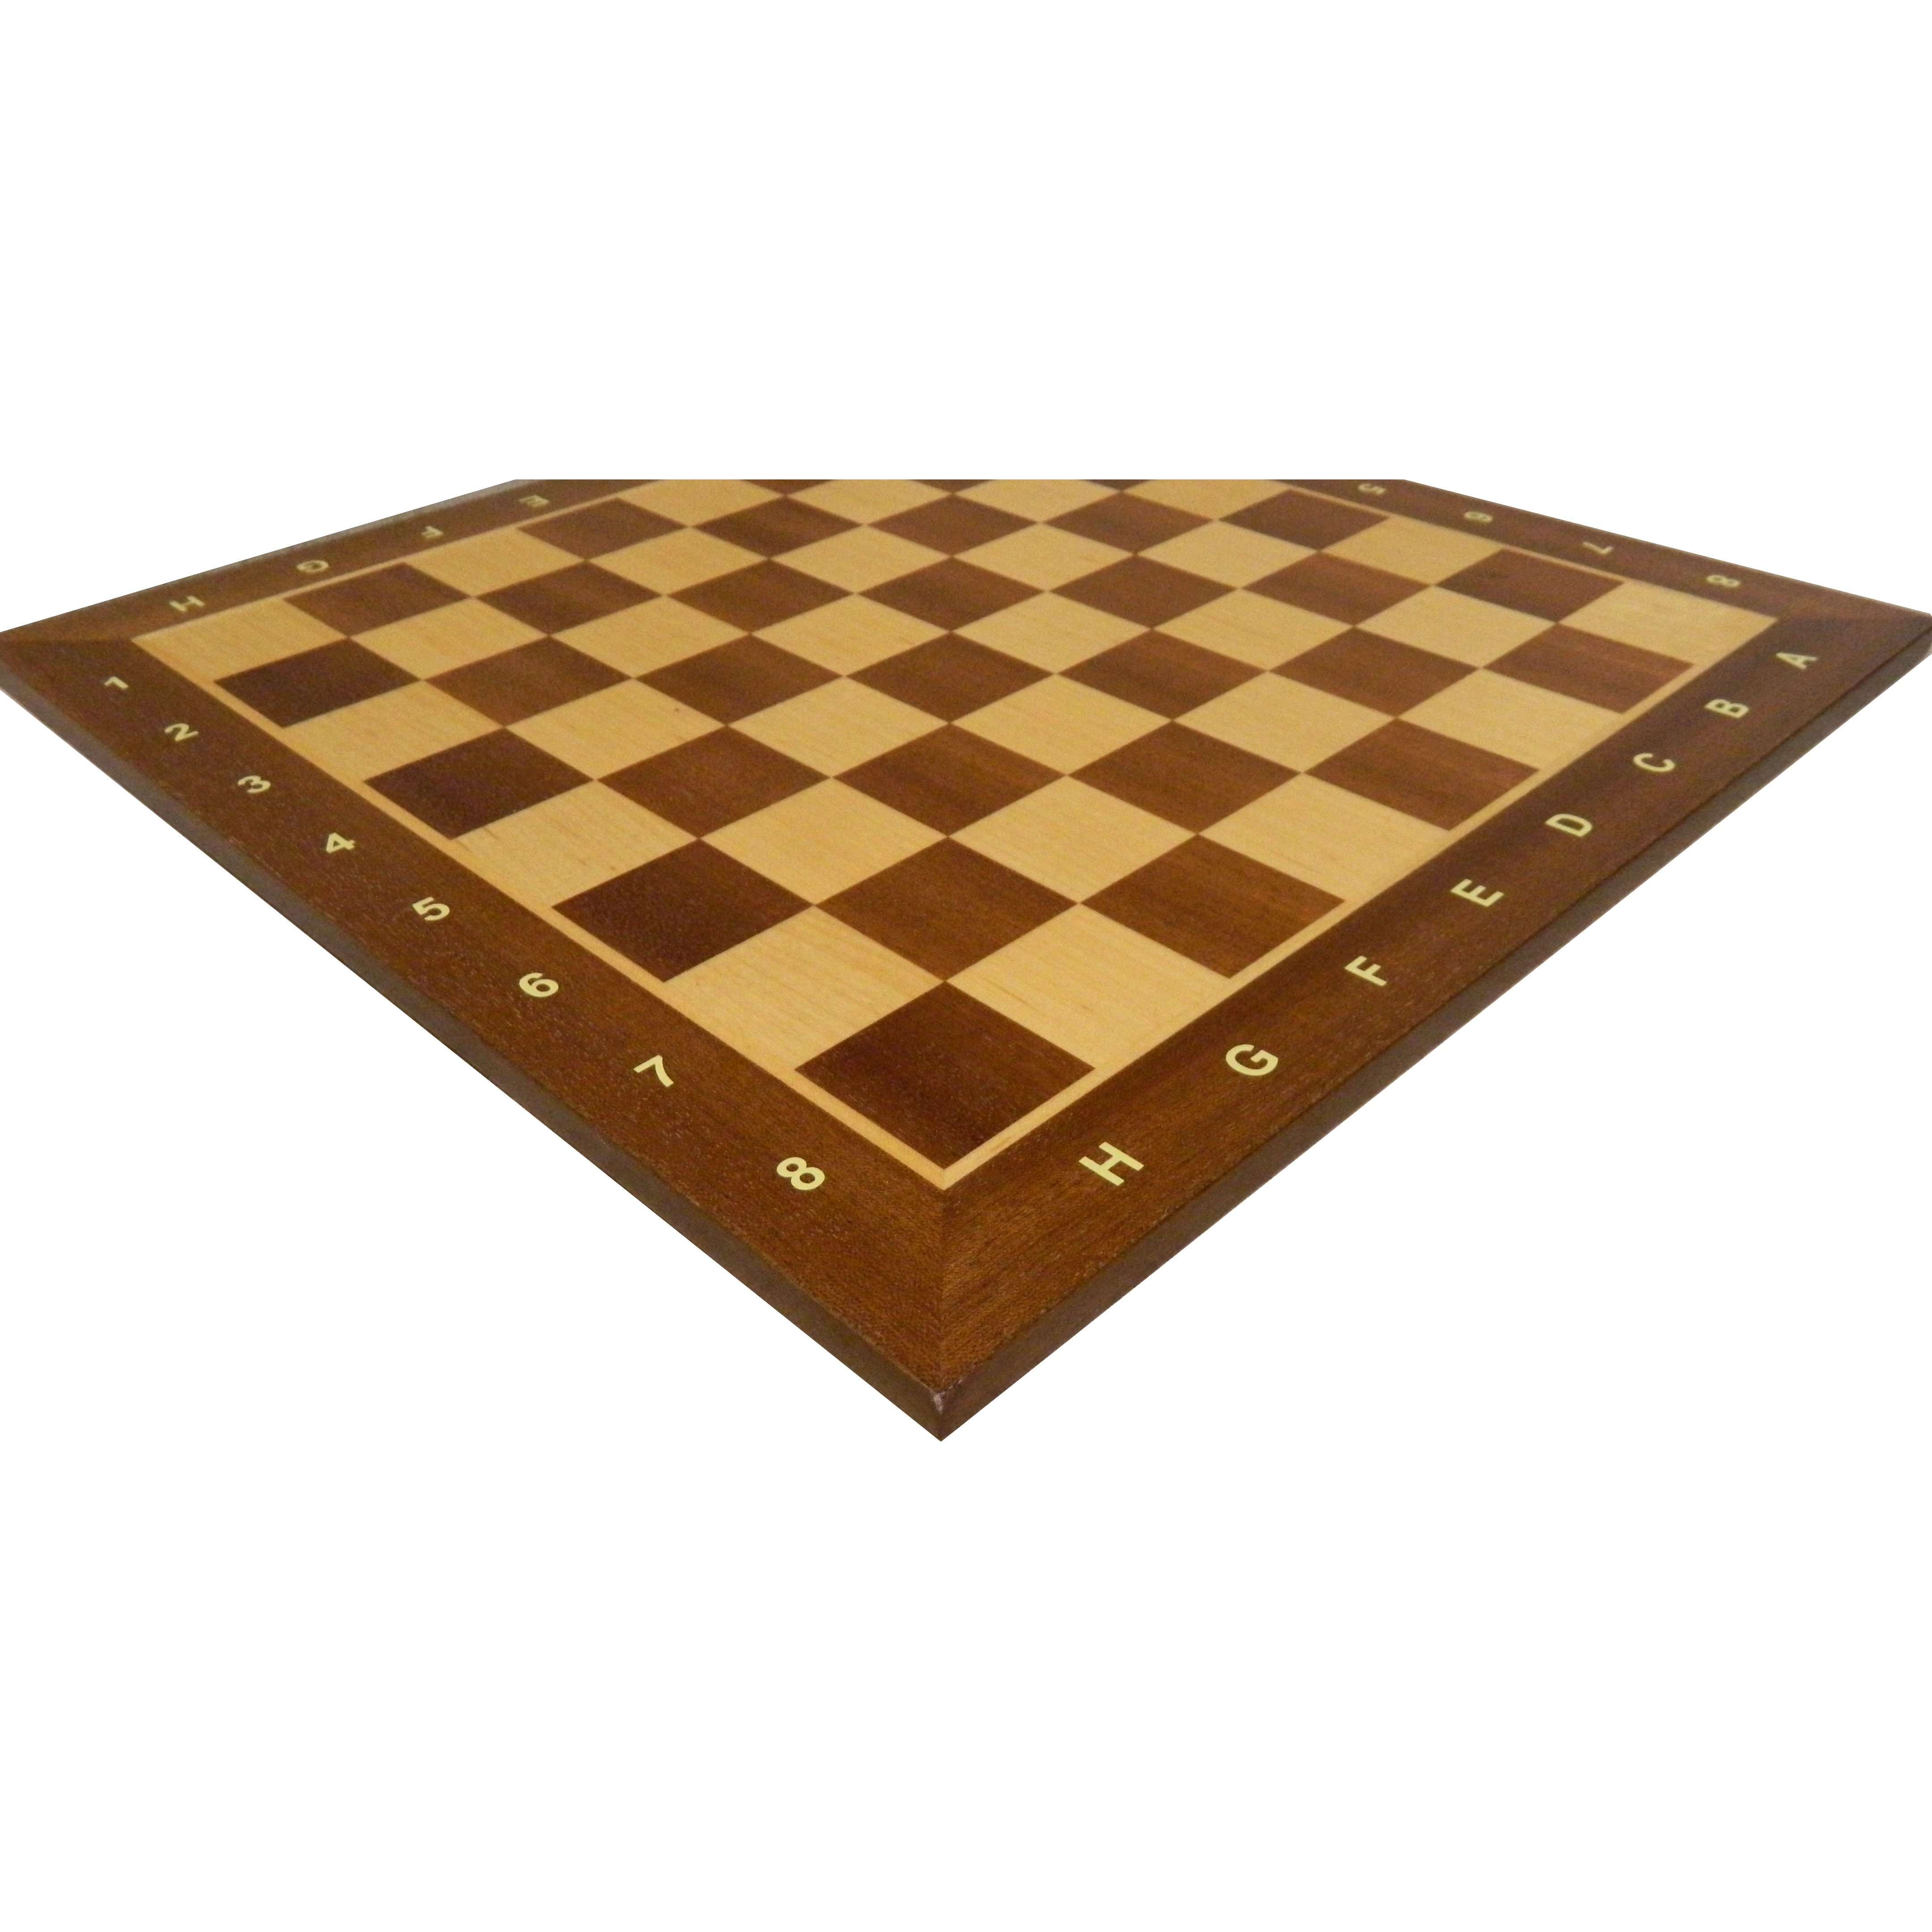 19 Stained Beech Staunton Analysis Chess Set with Storage Box